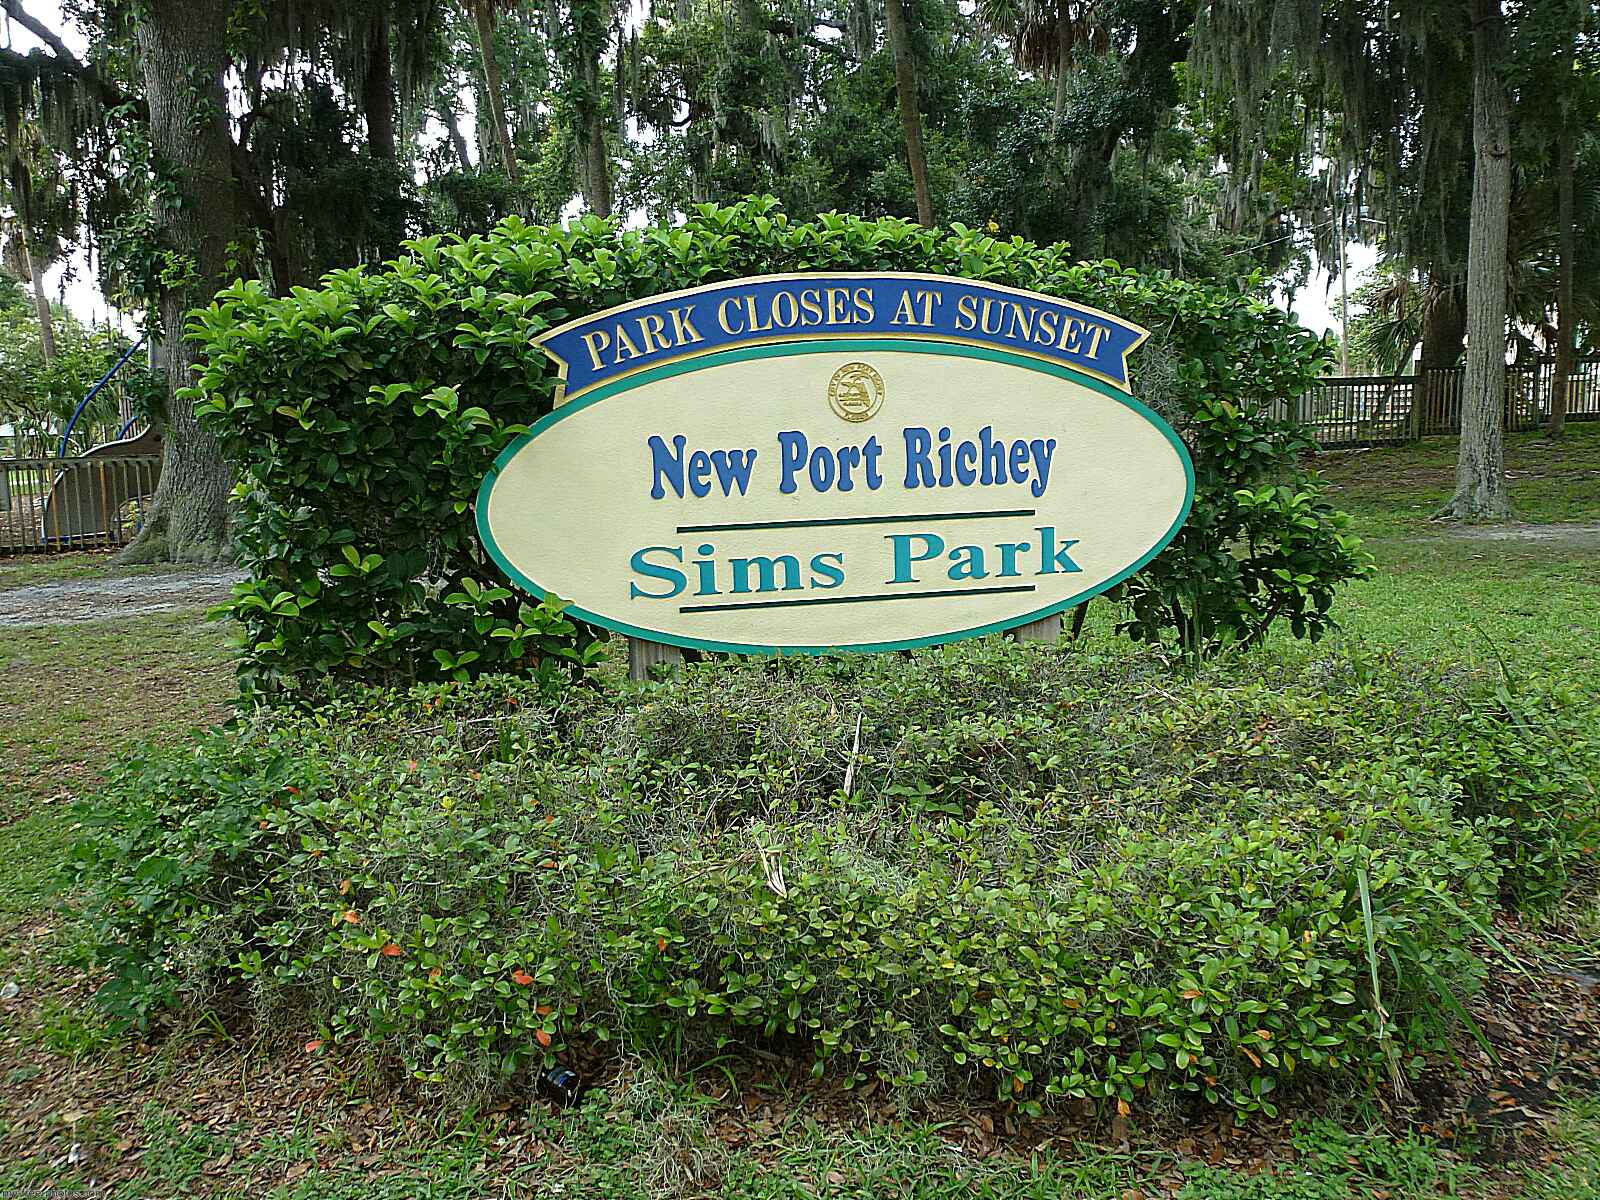 New Port Richey,Sims Park